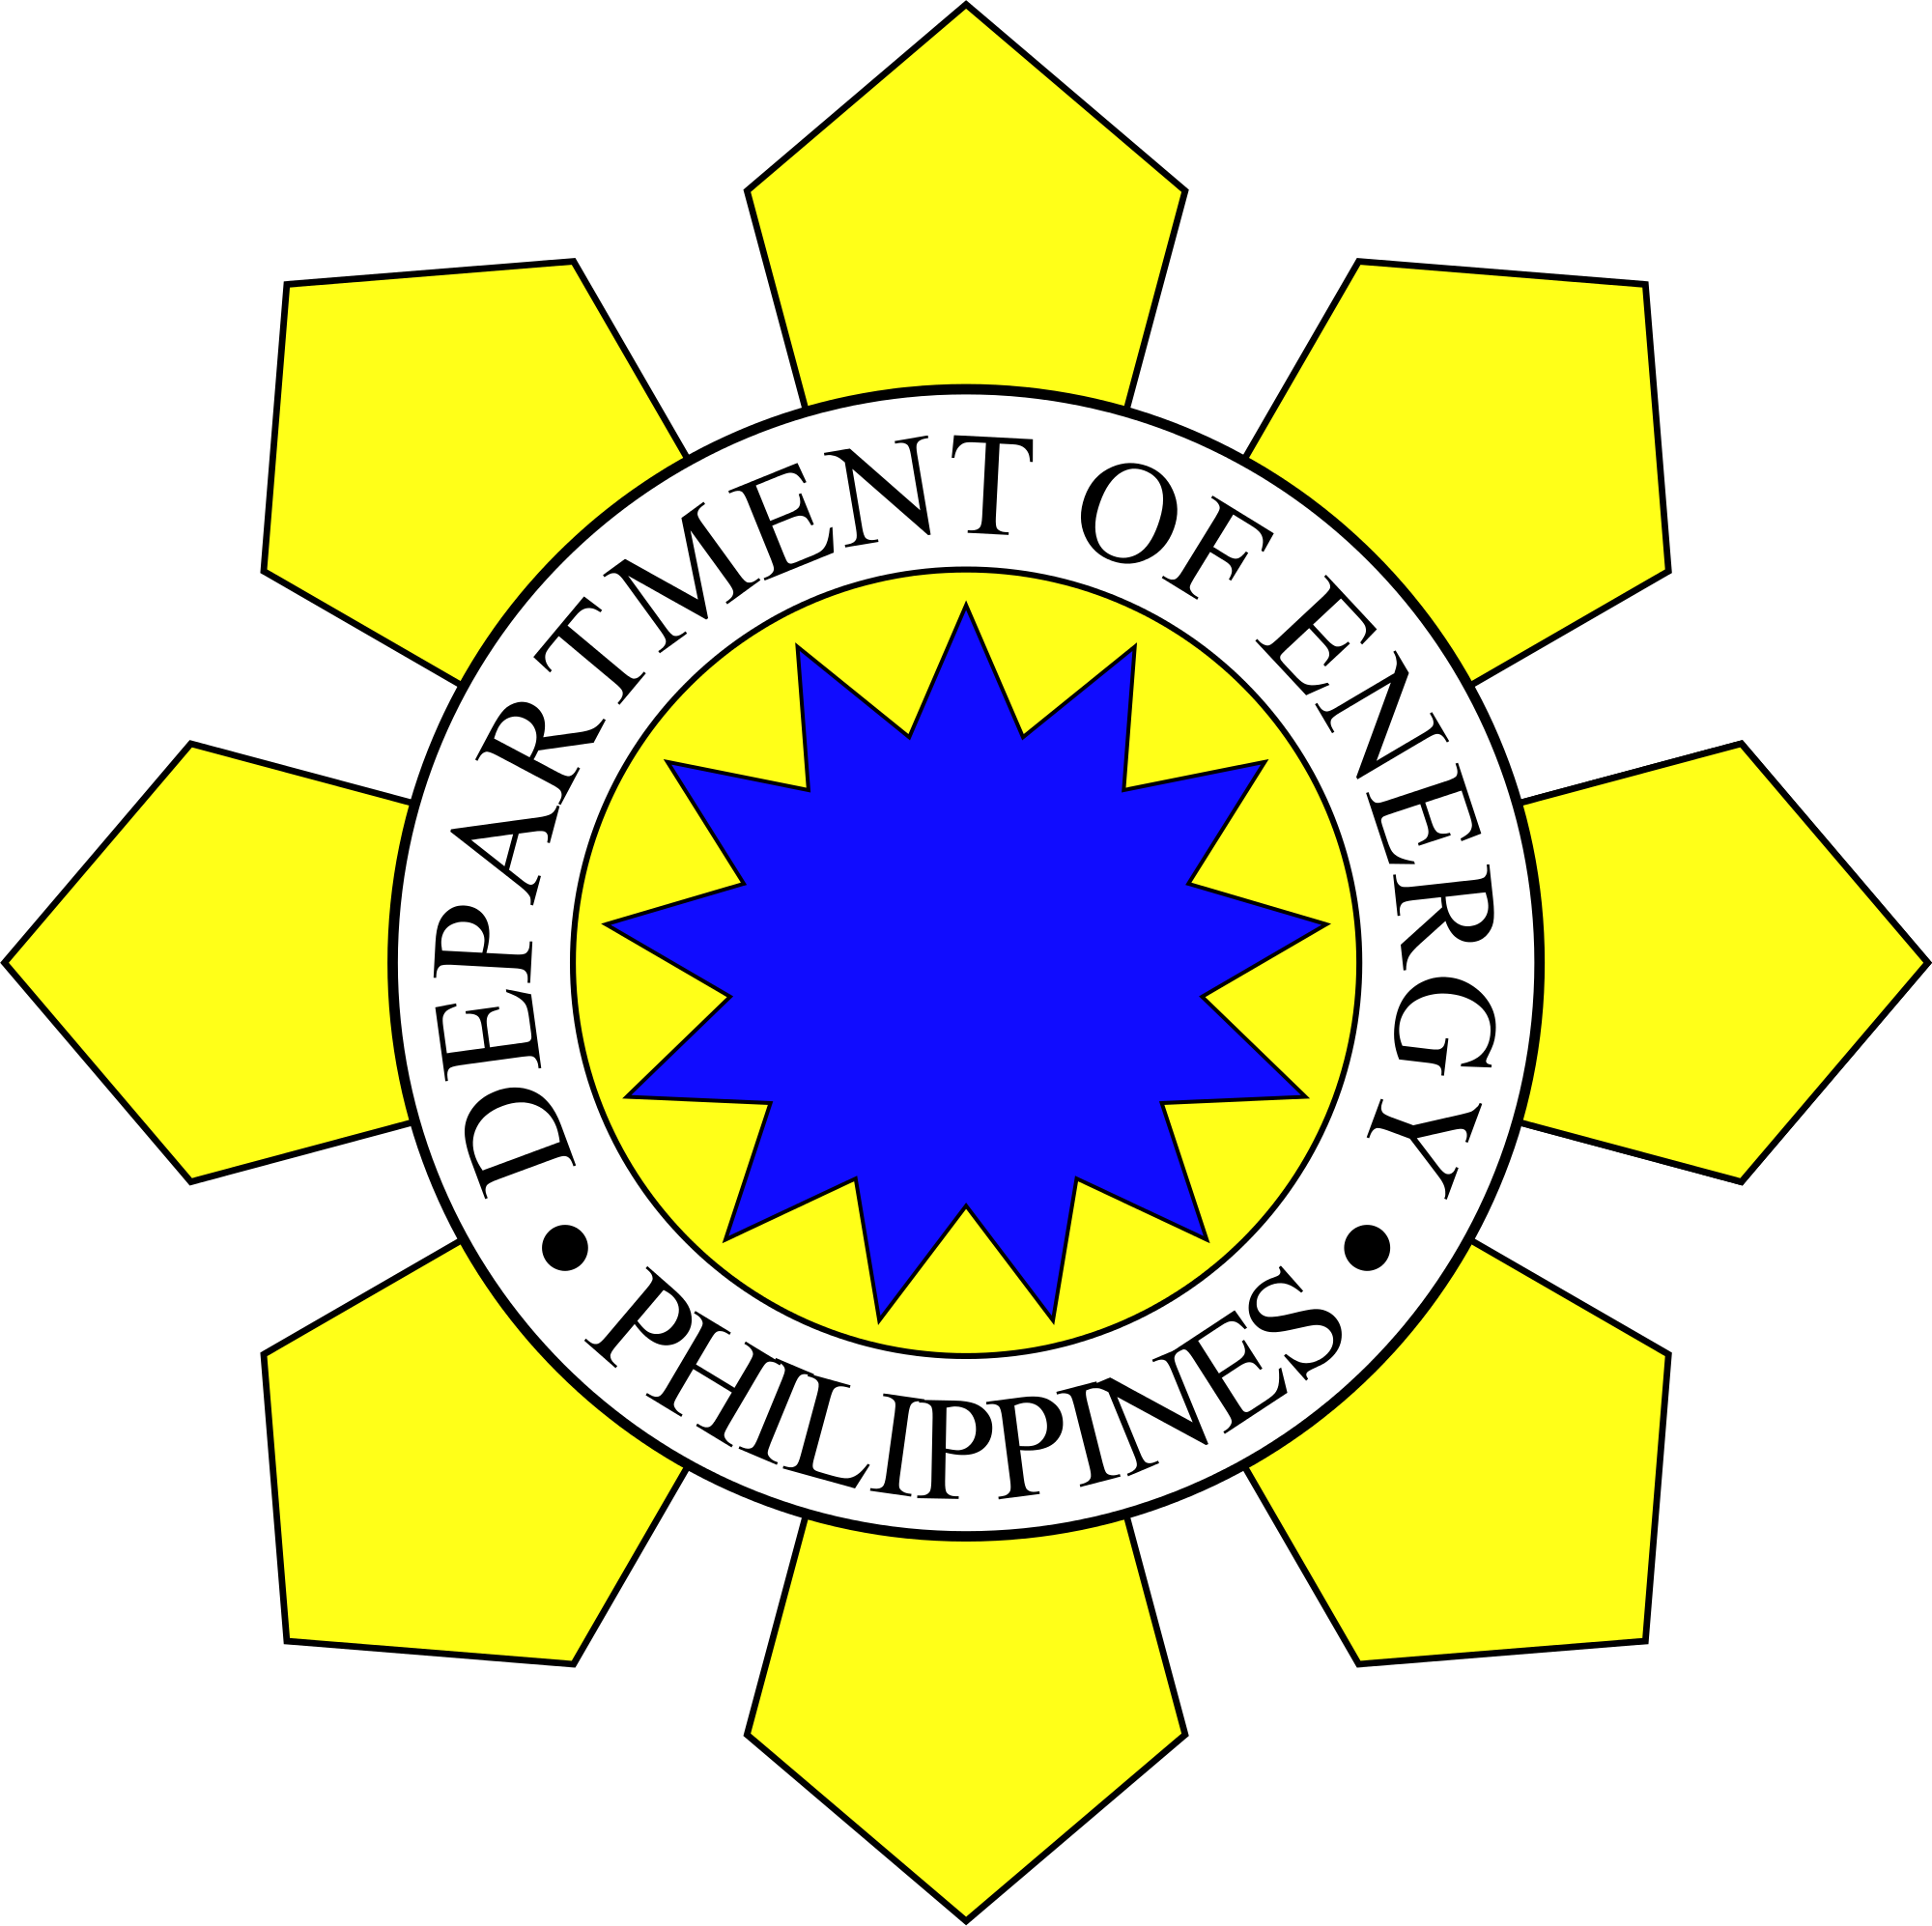 Via Doe - Gov - Ph - 2016 - Mb - Com - Ph - Department Of Tourism Philippines (2000x1994)